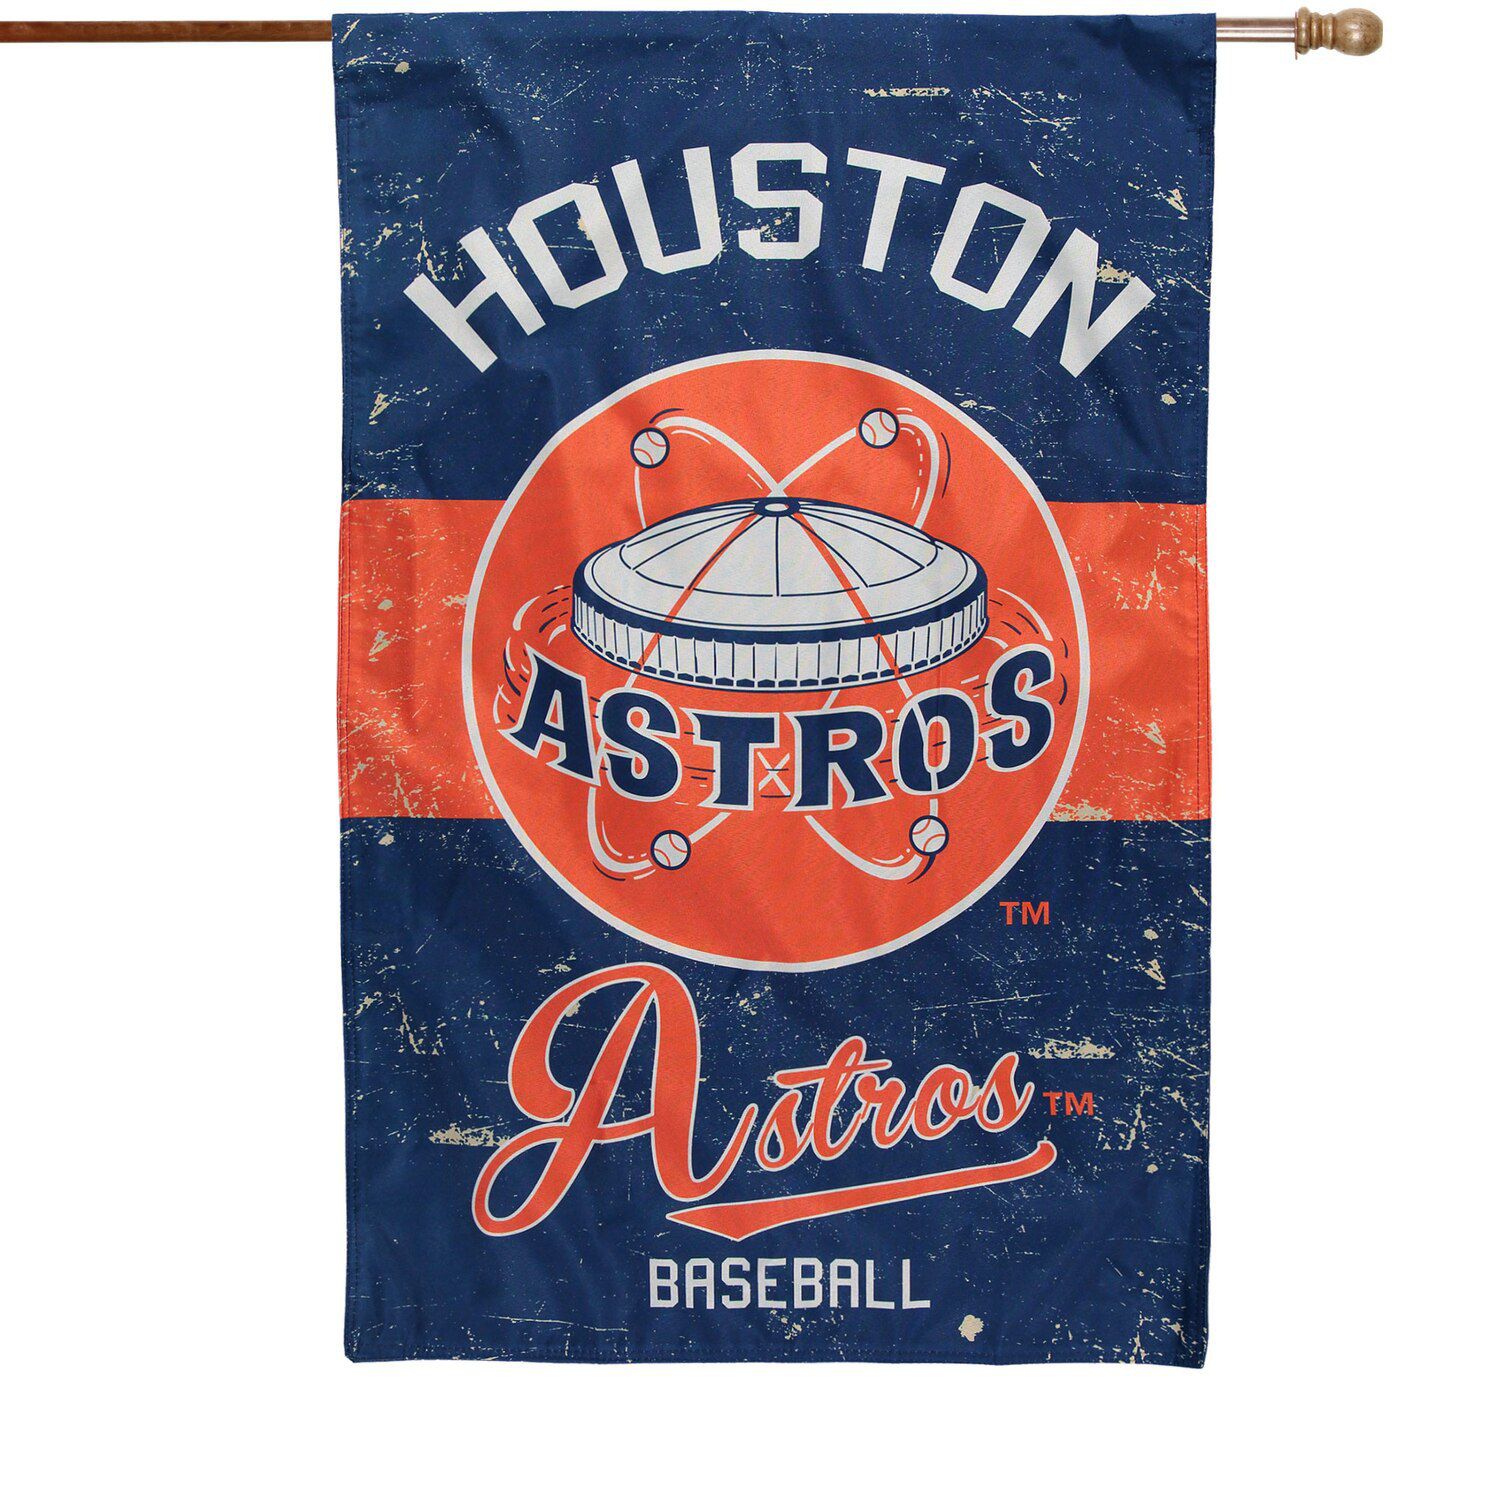 Image for Unbranded Houston Astros 28" x 44" Vintage Linen House Flag at Kohl's.